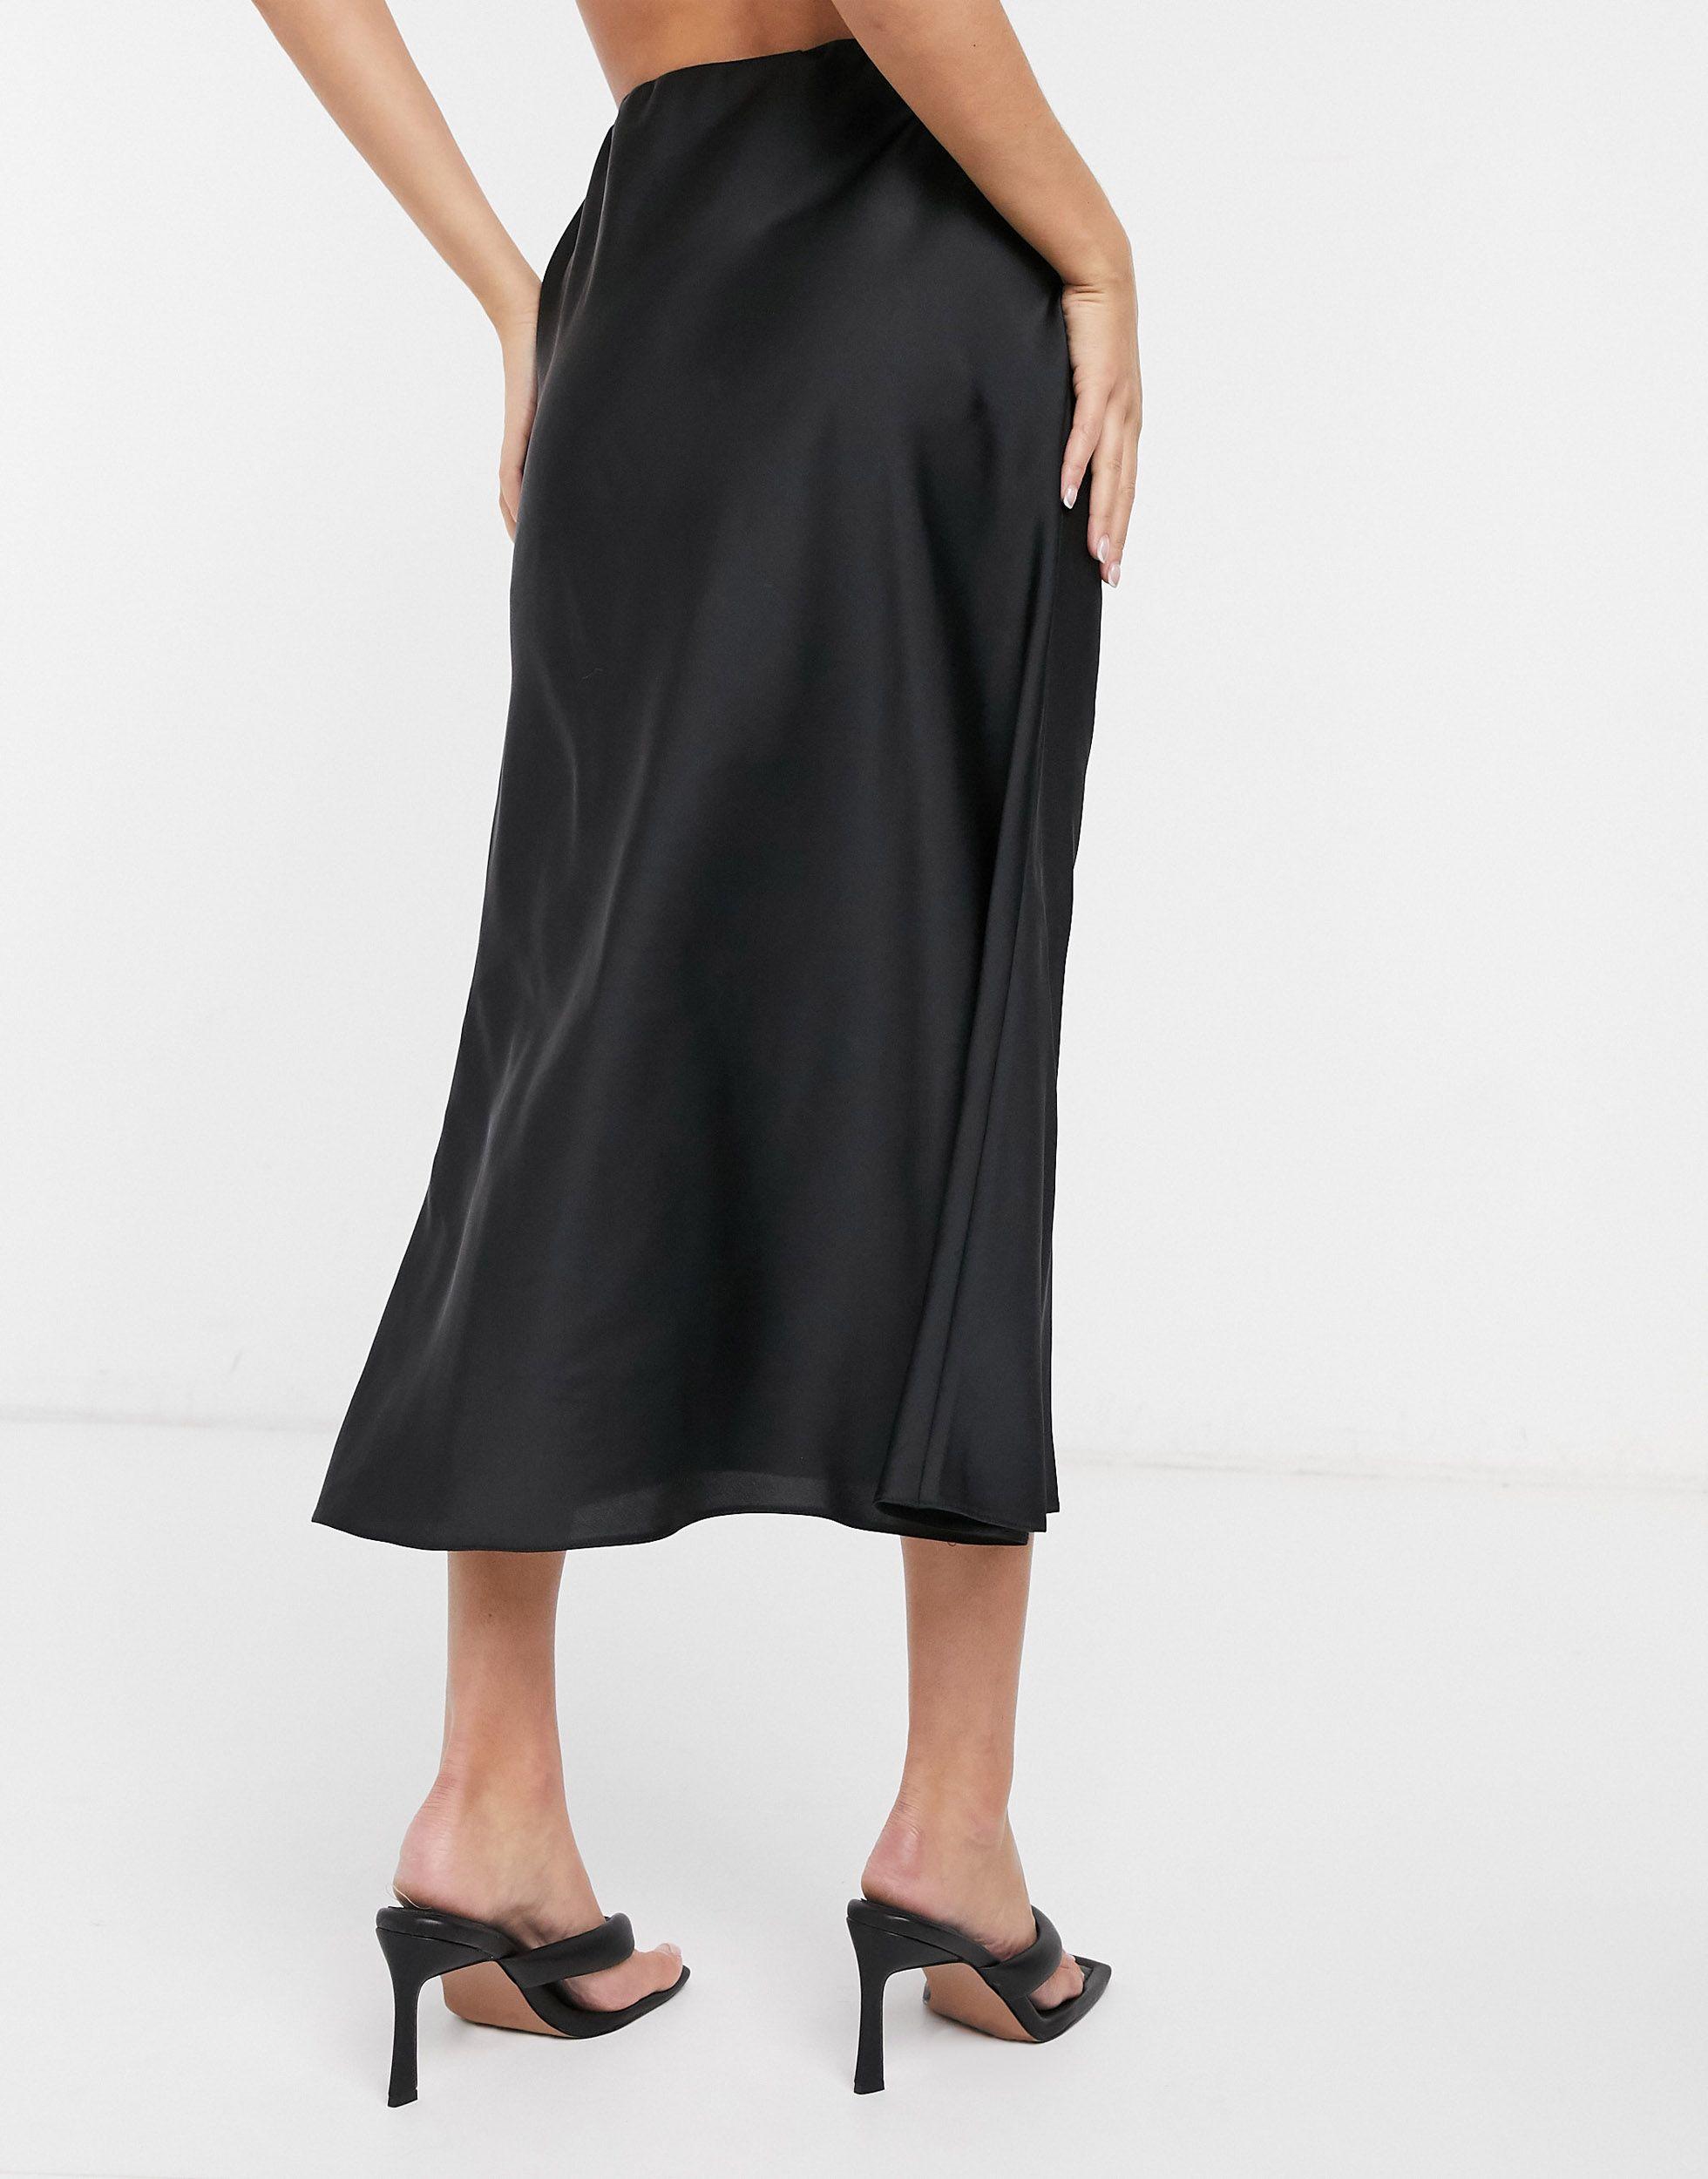 ASOS Bias Cut Satin Slip Midi Skirt in Black - Lyst